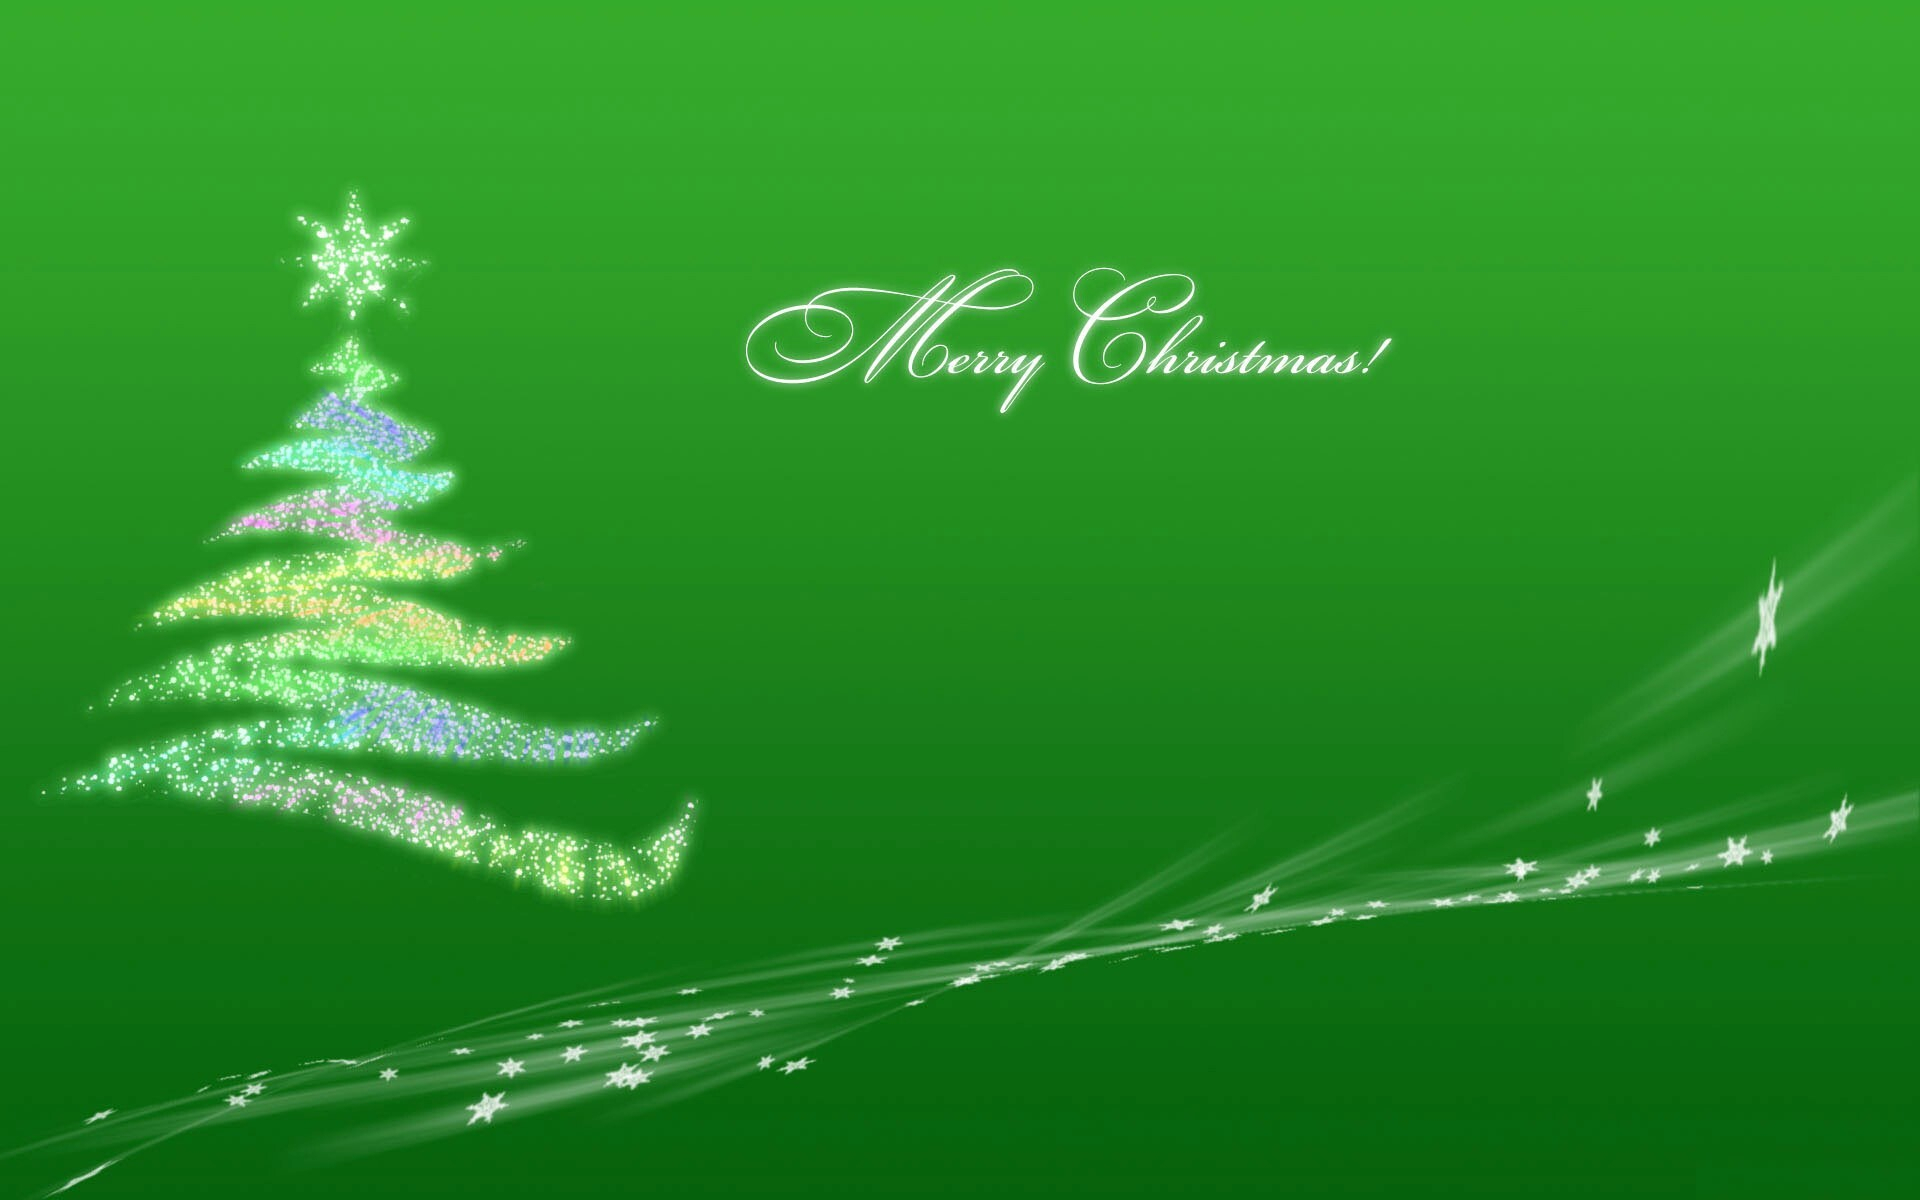 Merry Christmas Green Wallpaper On Christmas Holiday Free encequiconcerne Noel Noel Noel